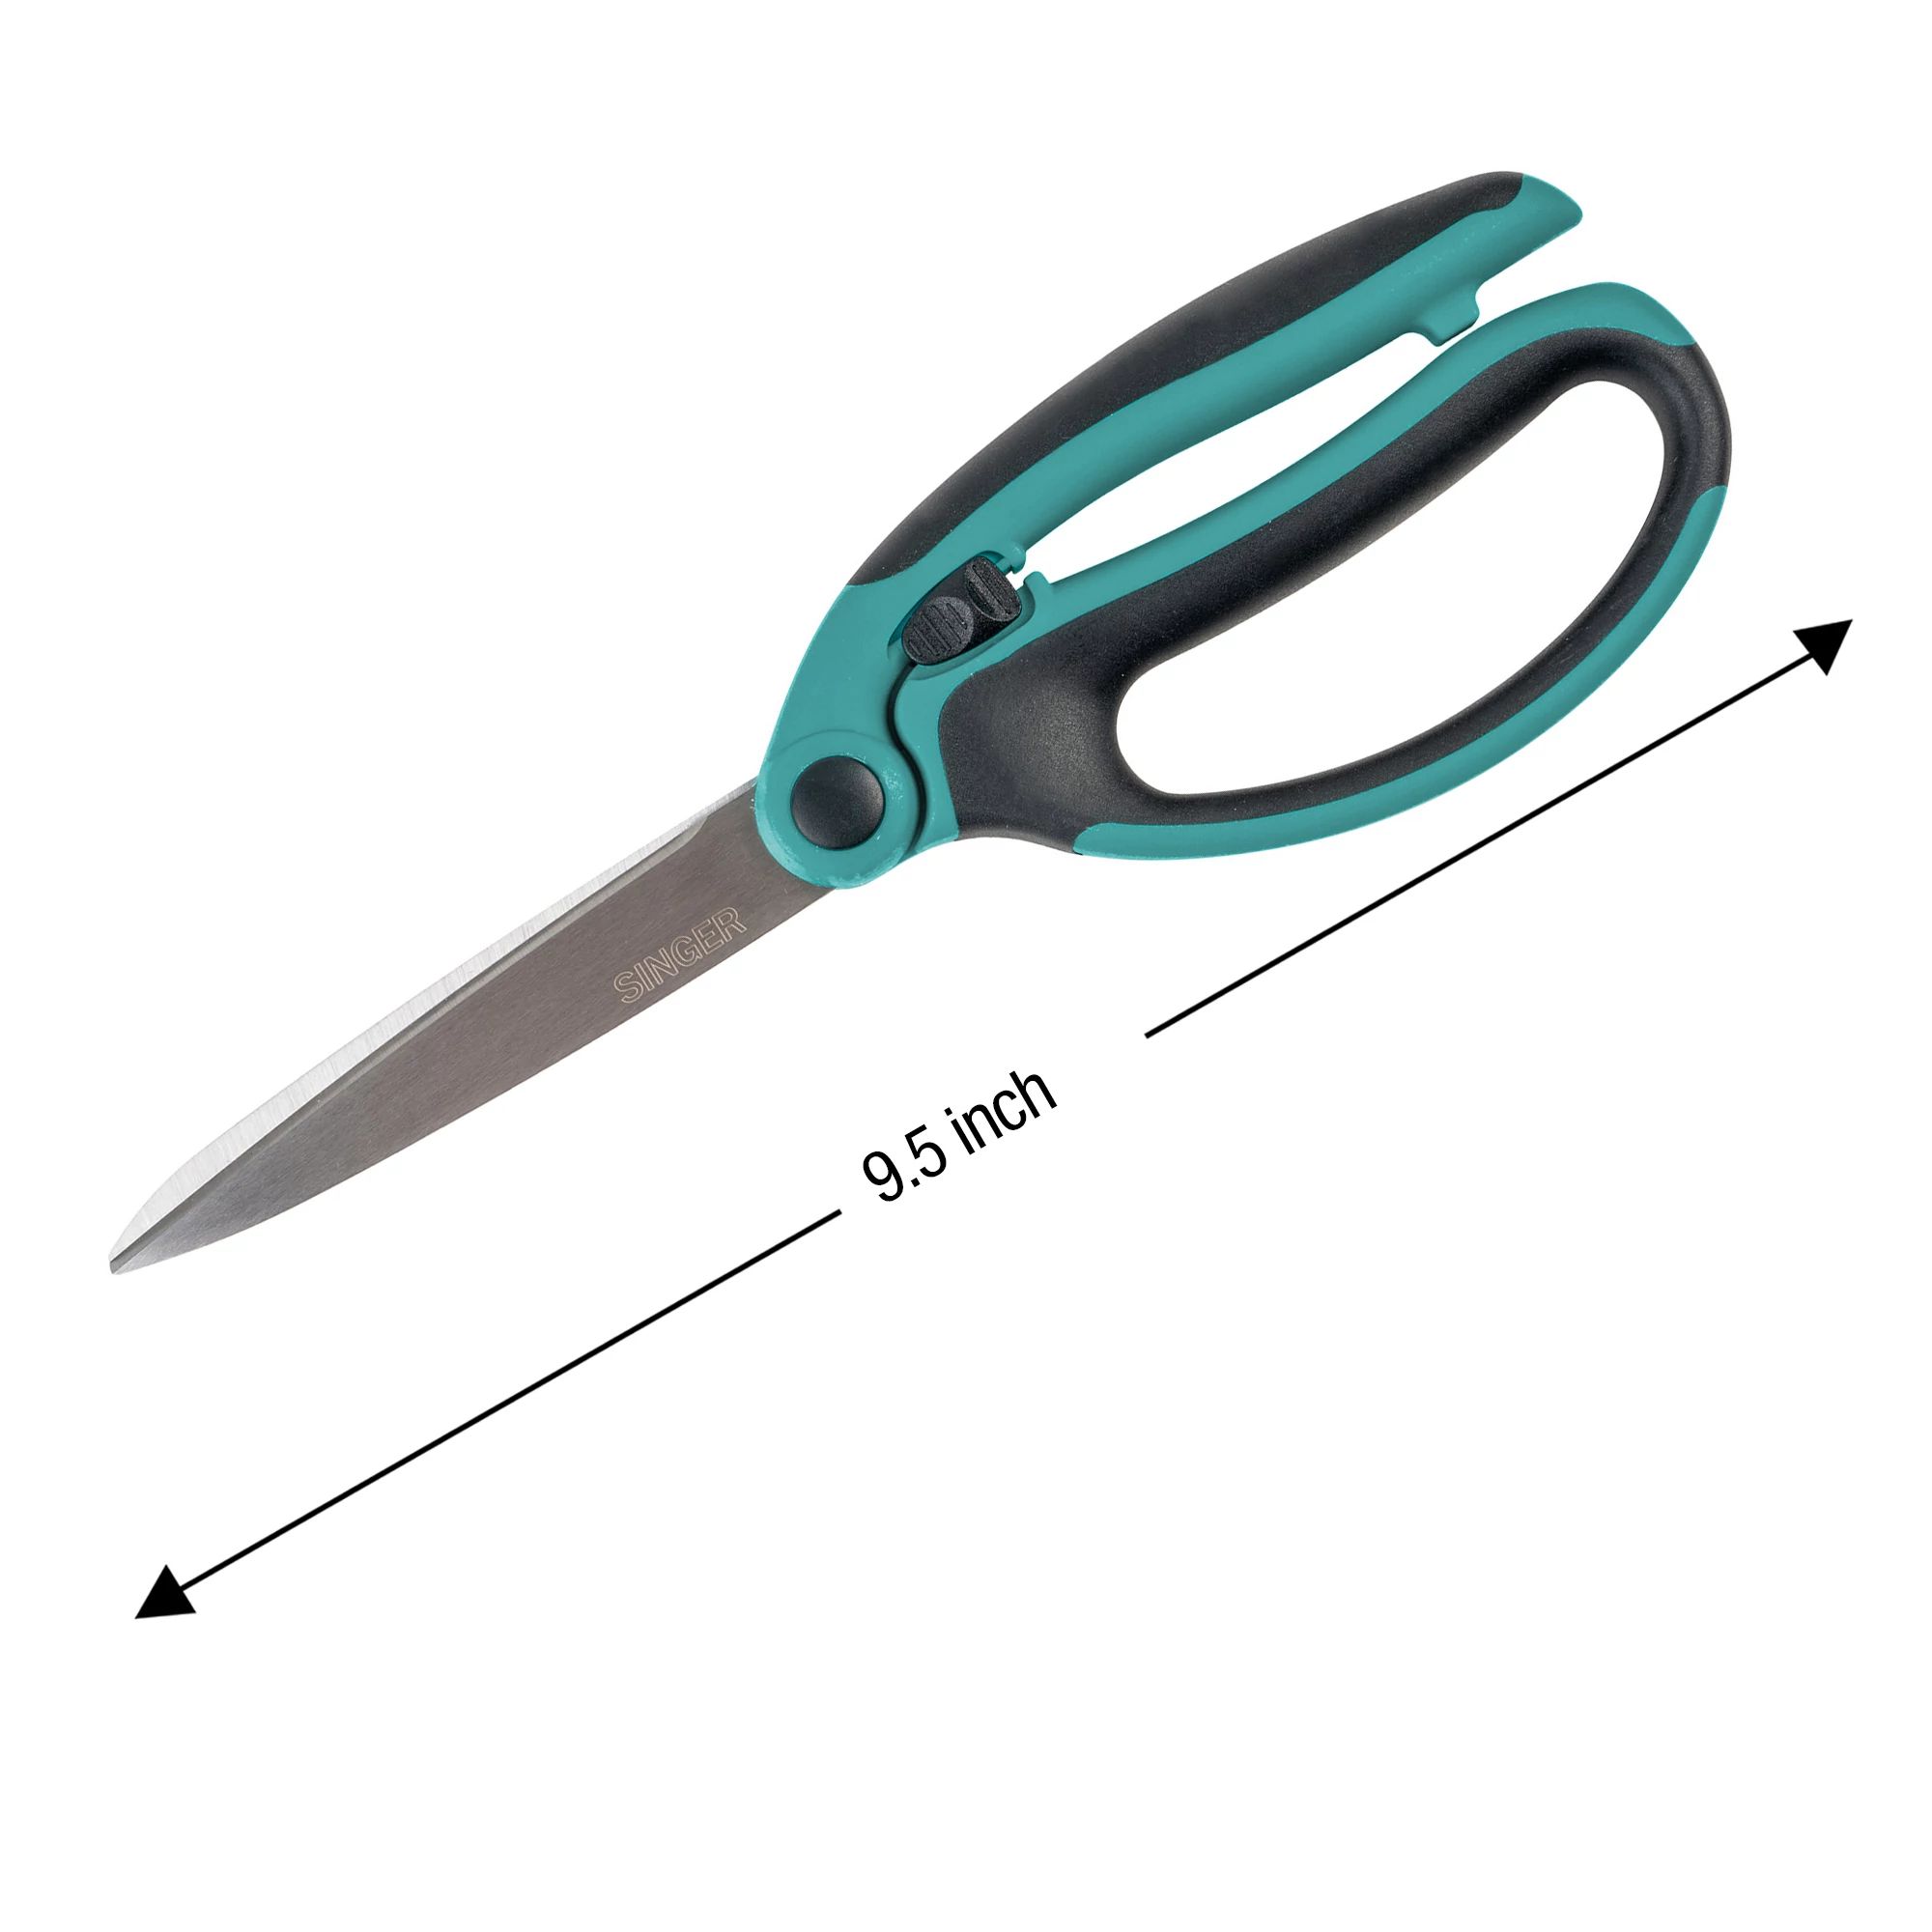 Singer 00450 8-Inch All Purpose Scissor With Comfort Grip